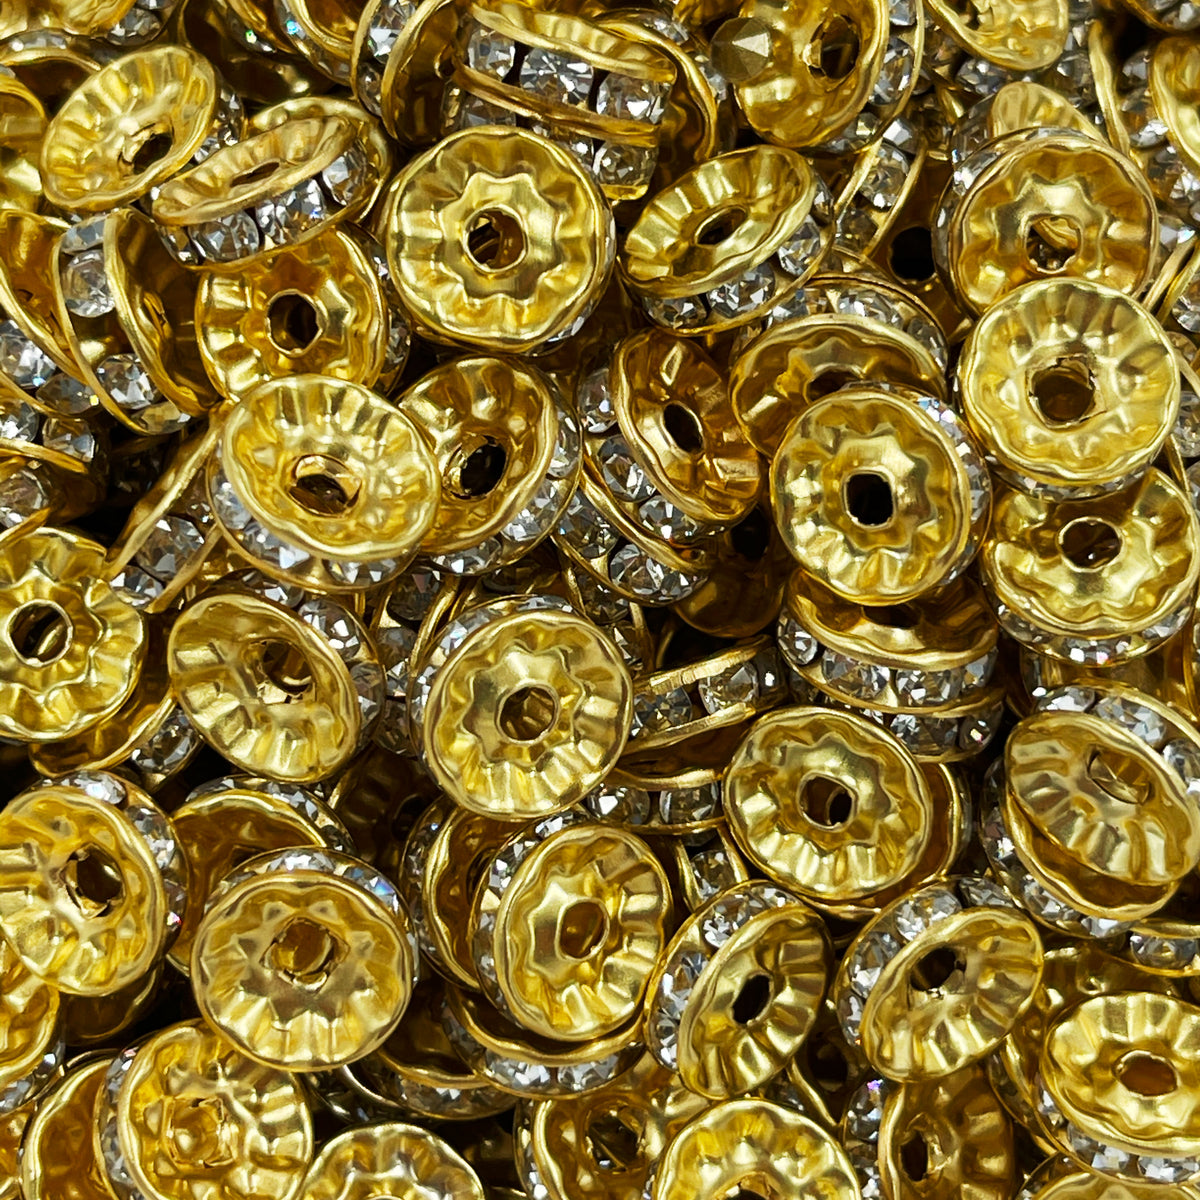 Wholesale Brass Rhinestone Spacer Beads 